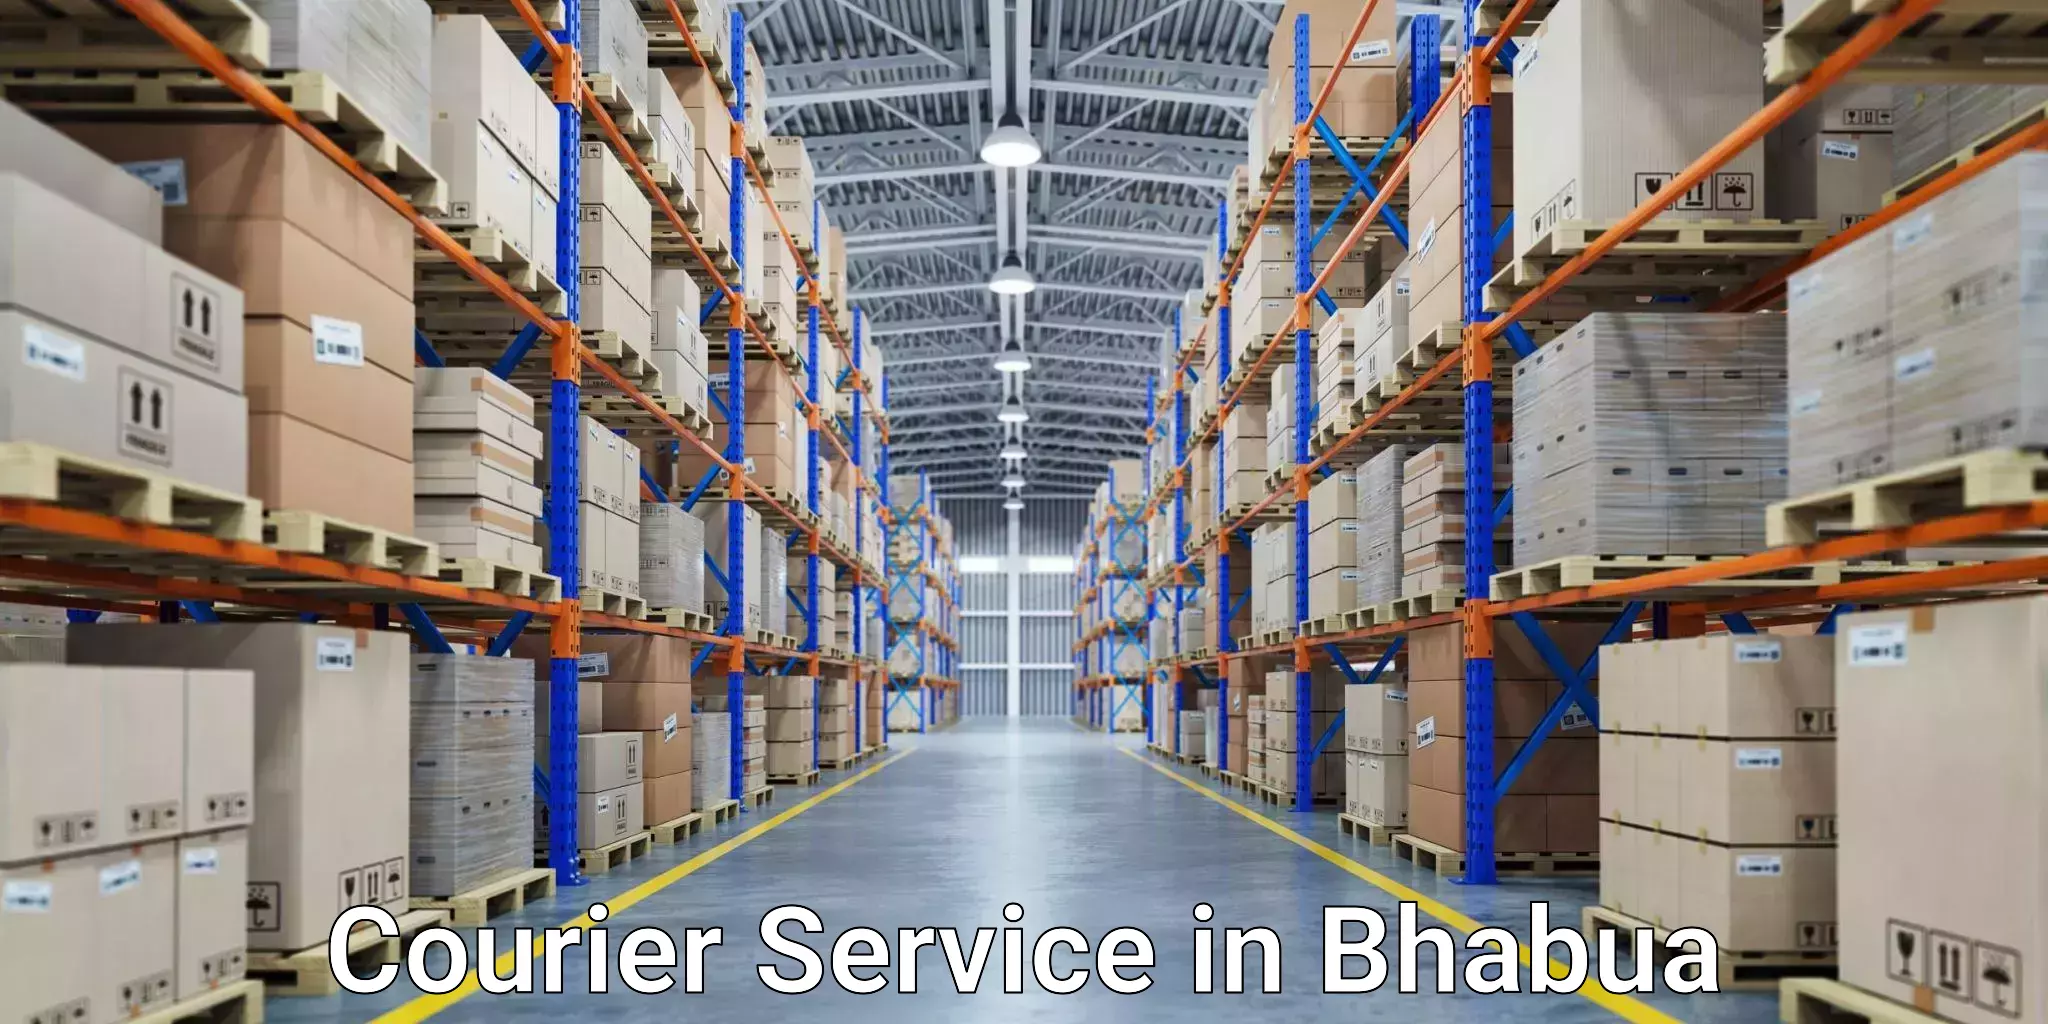 Secure packaging in Bhabua